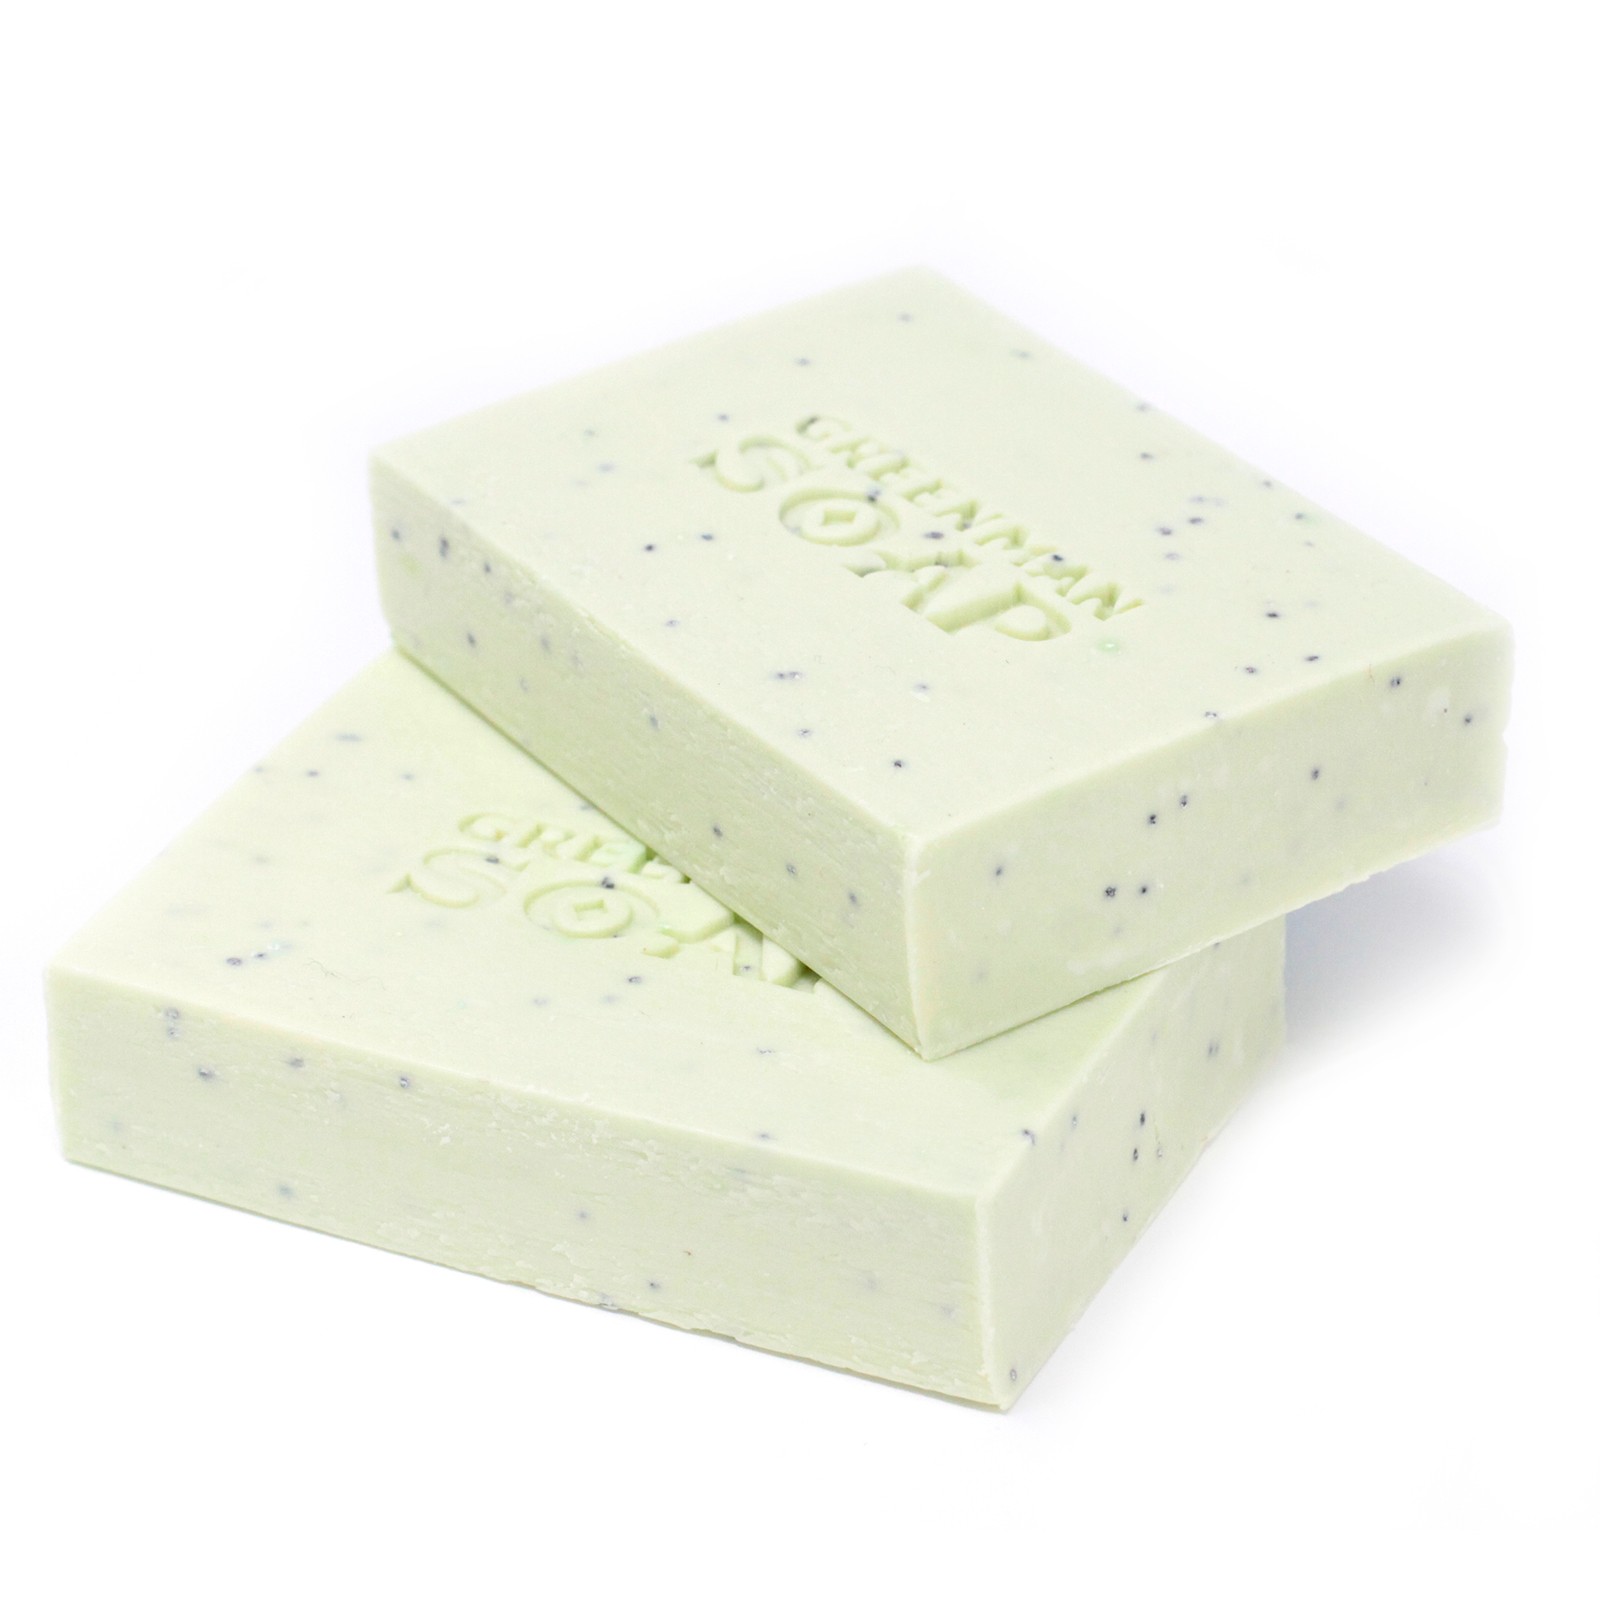 Greenman Soap - Antiseptic Spot Attack (100g)